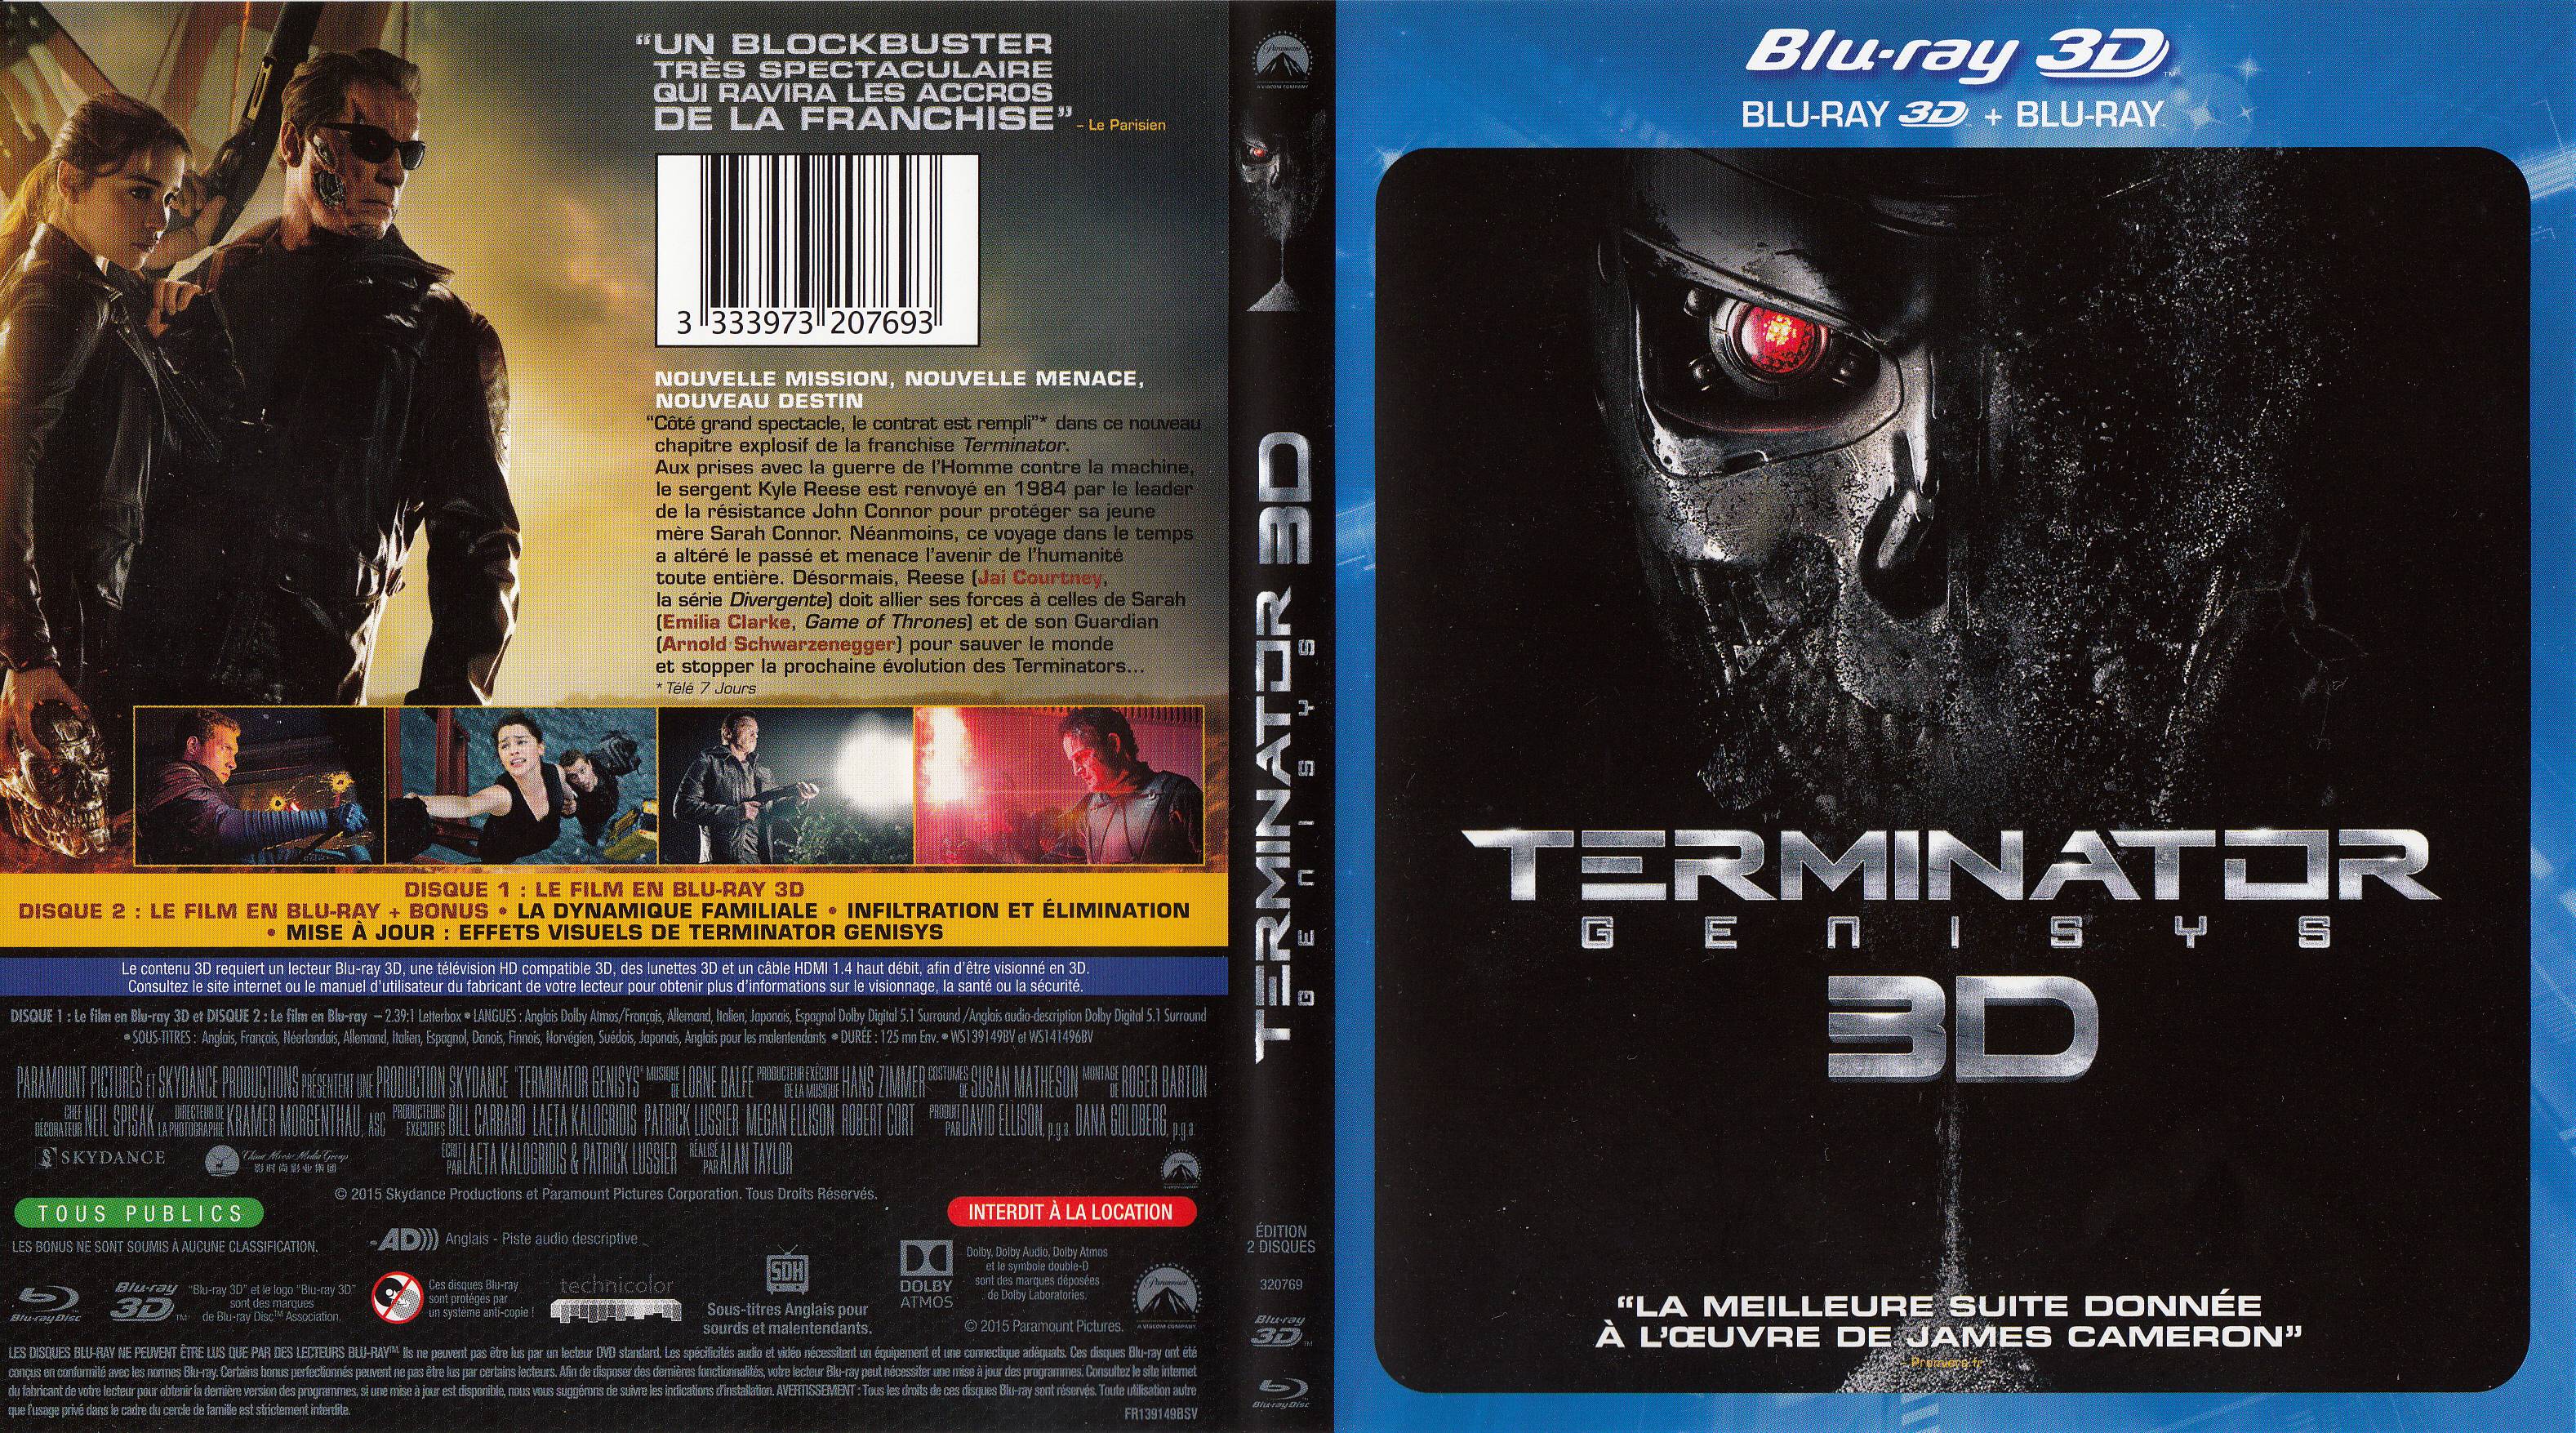 Jaquette DVD Terminator Genisys 3D (BLU-RAY)